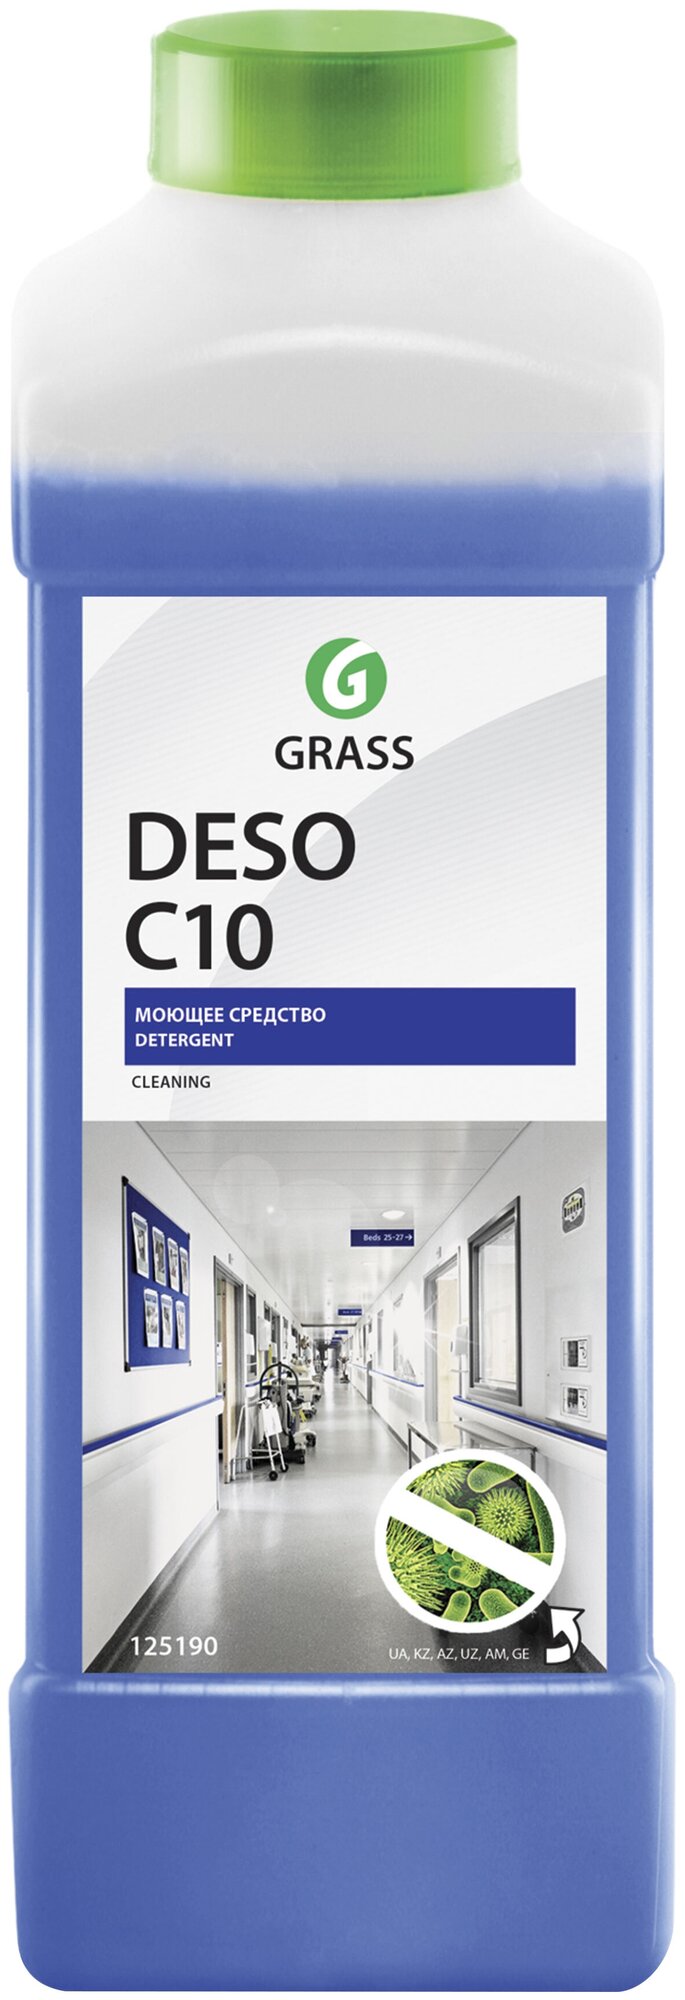 Grass  для чистки и дезинфекции DESO C10, 1000 мл, тип крышки .